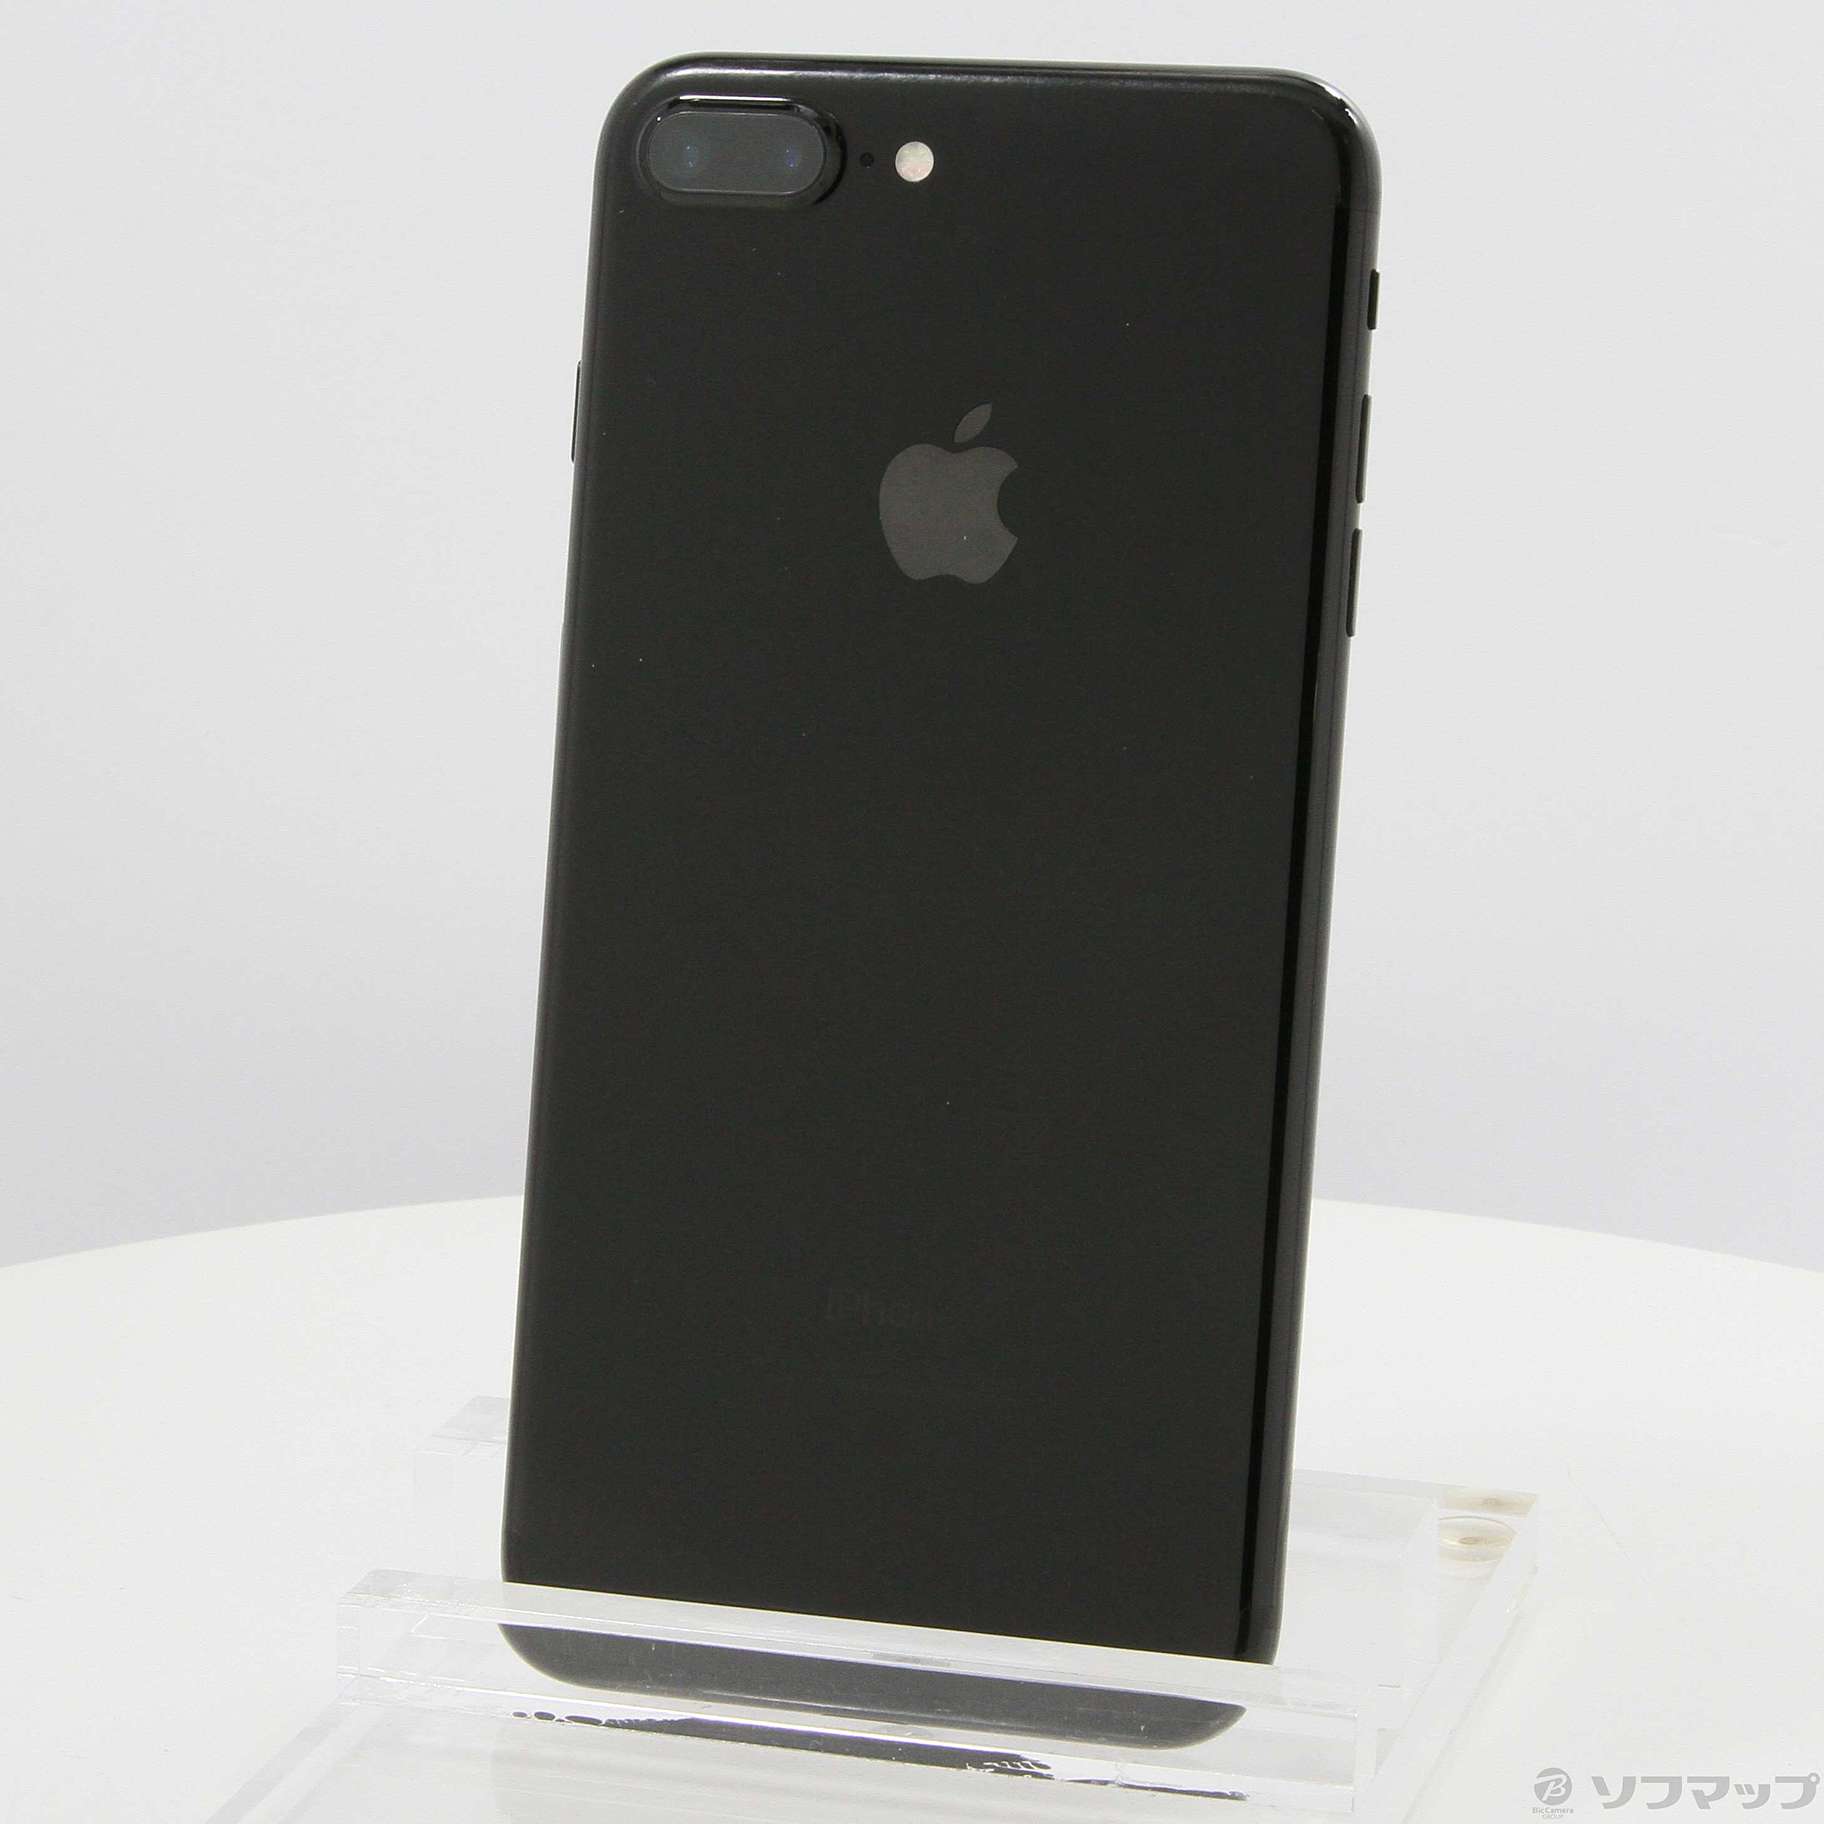 iPhone7 JET BLACK 128GB simフリー